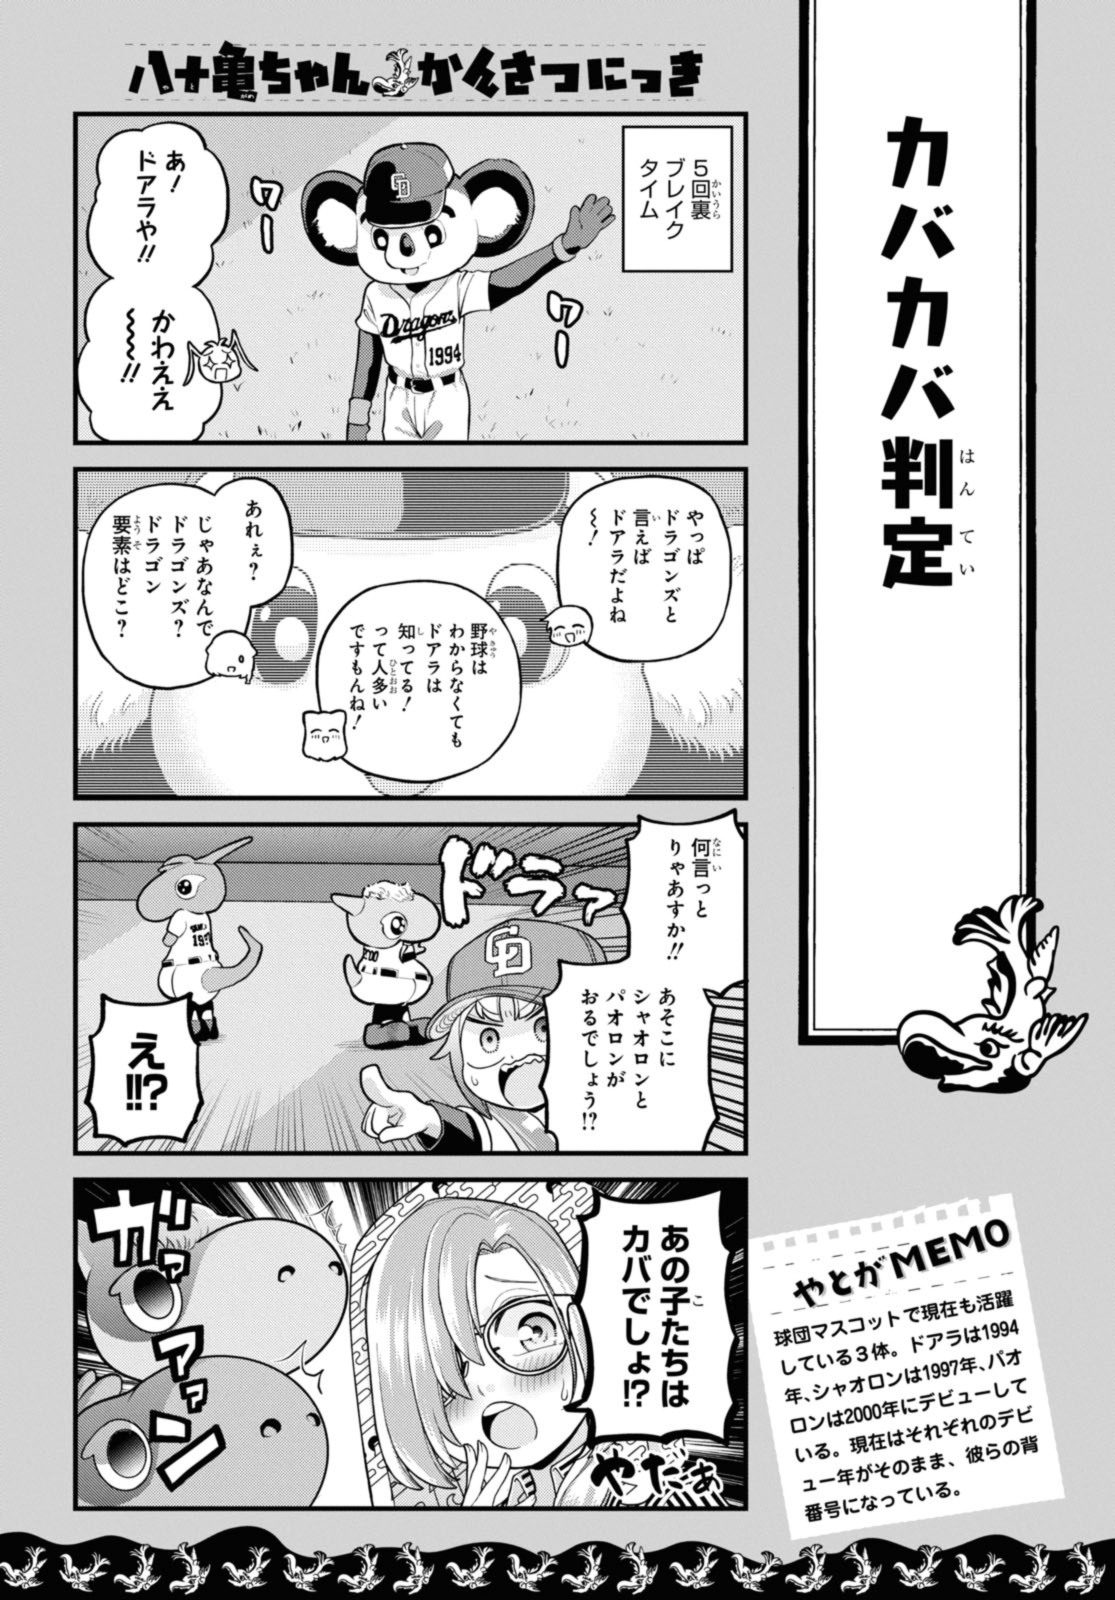 Yatogame-chan Kansatsu Nikki - Chapter 74.2 - Page 2